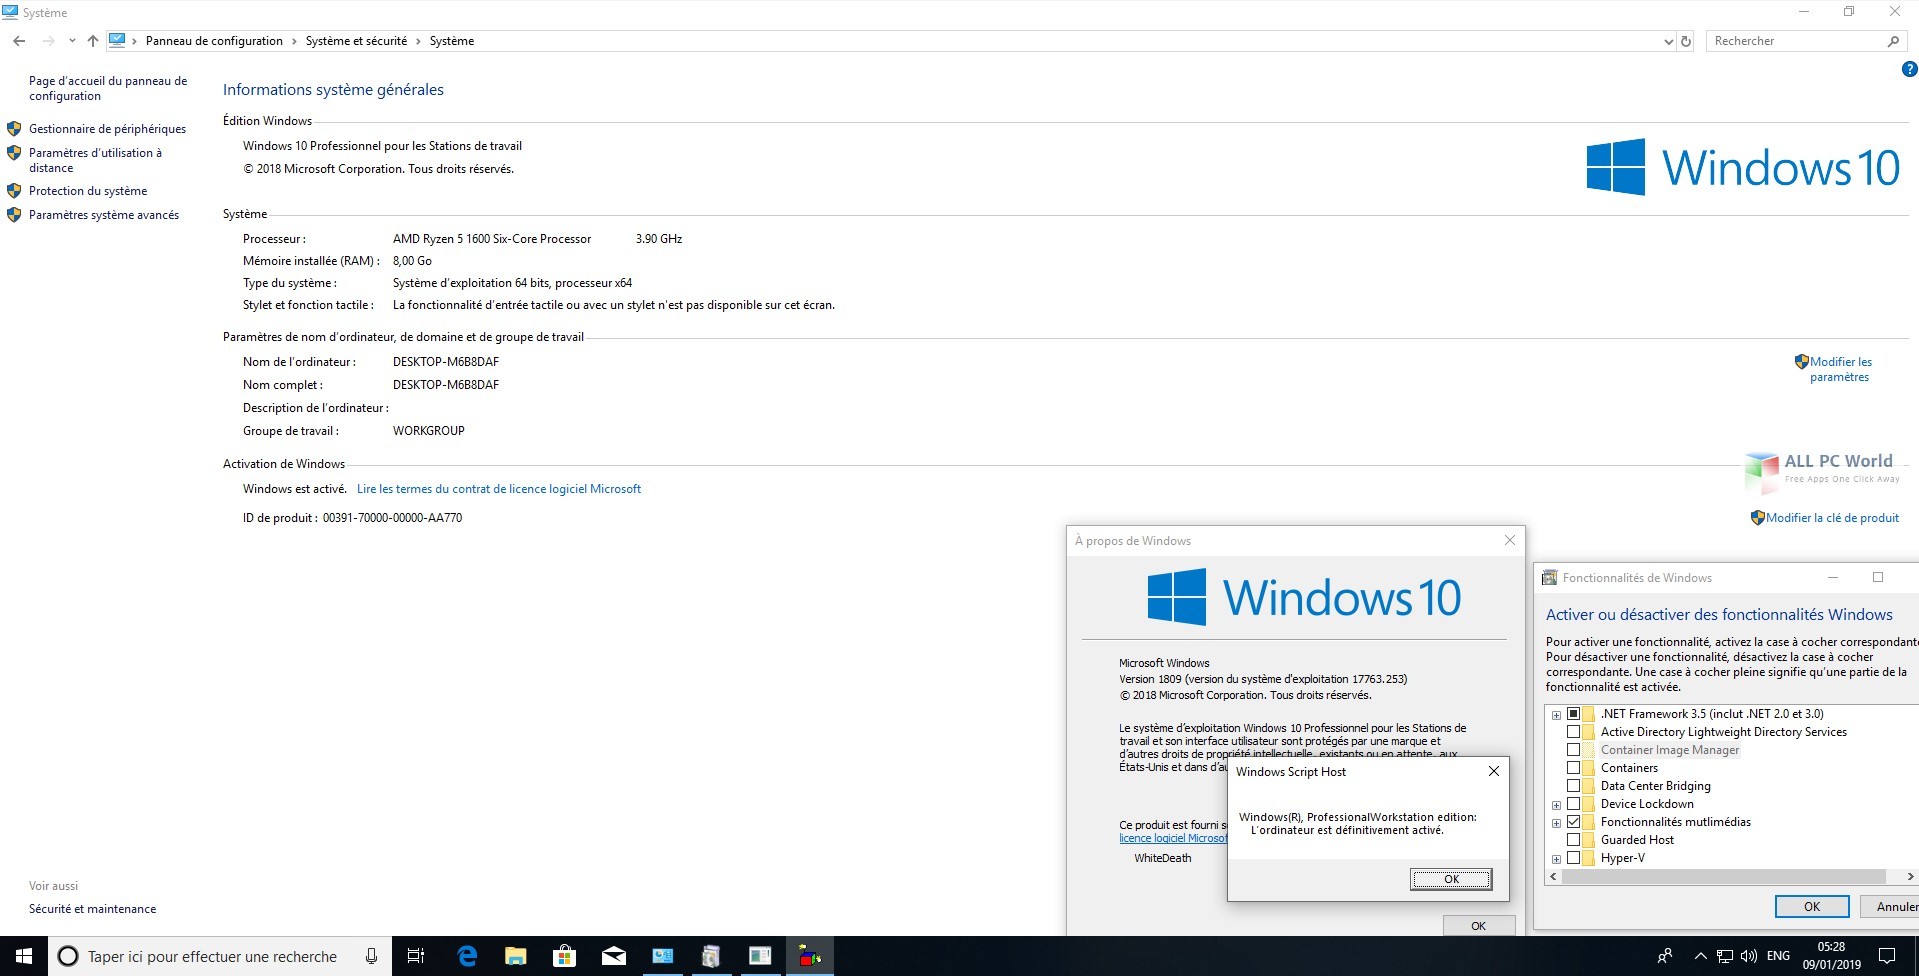 Windows 10 RS5 AIO with January 2019